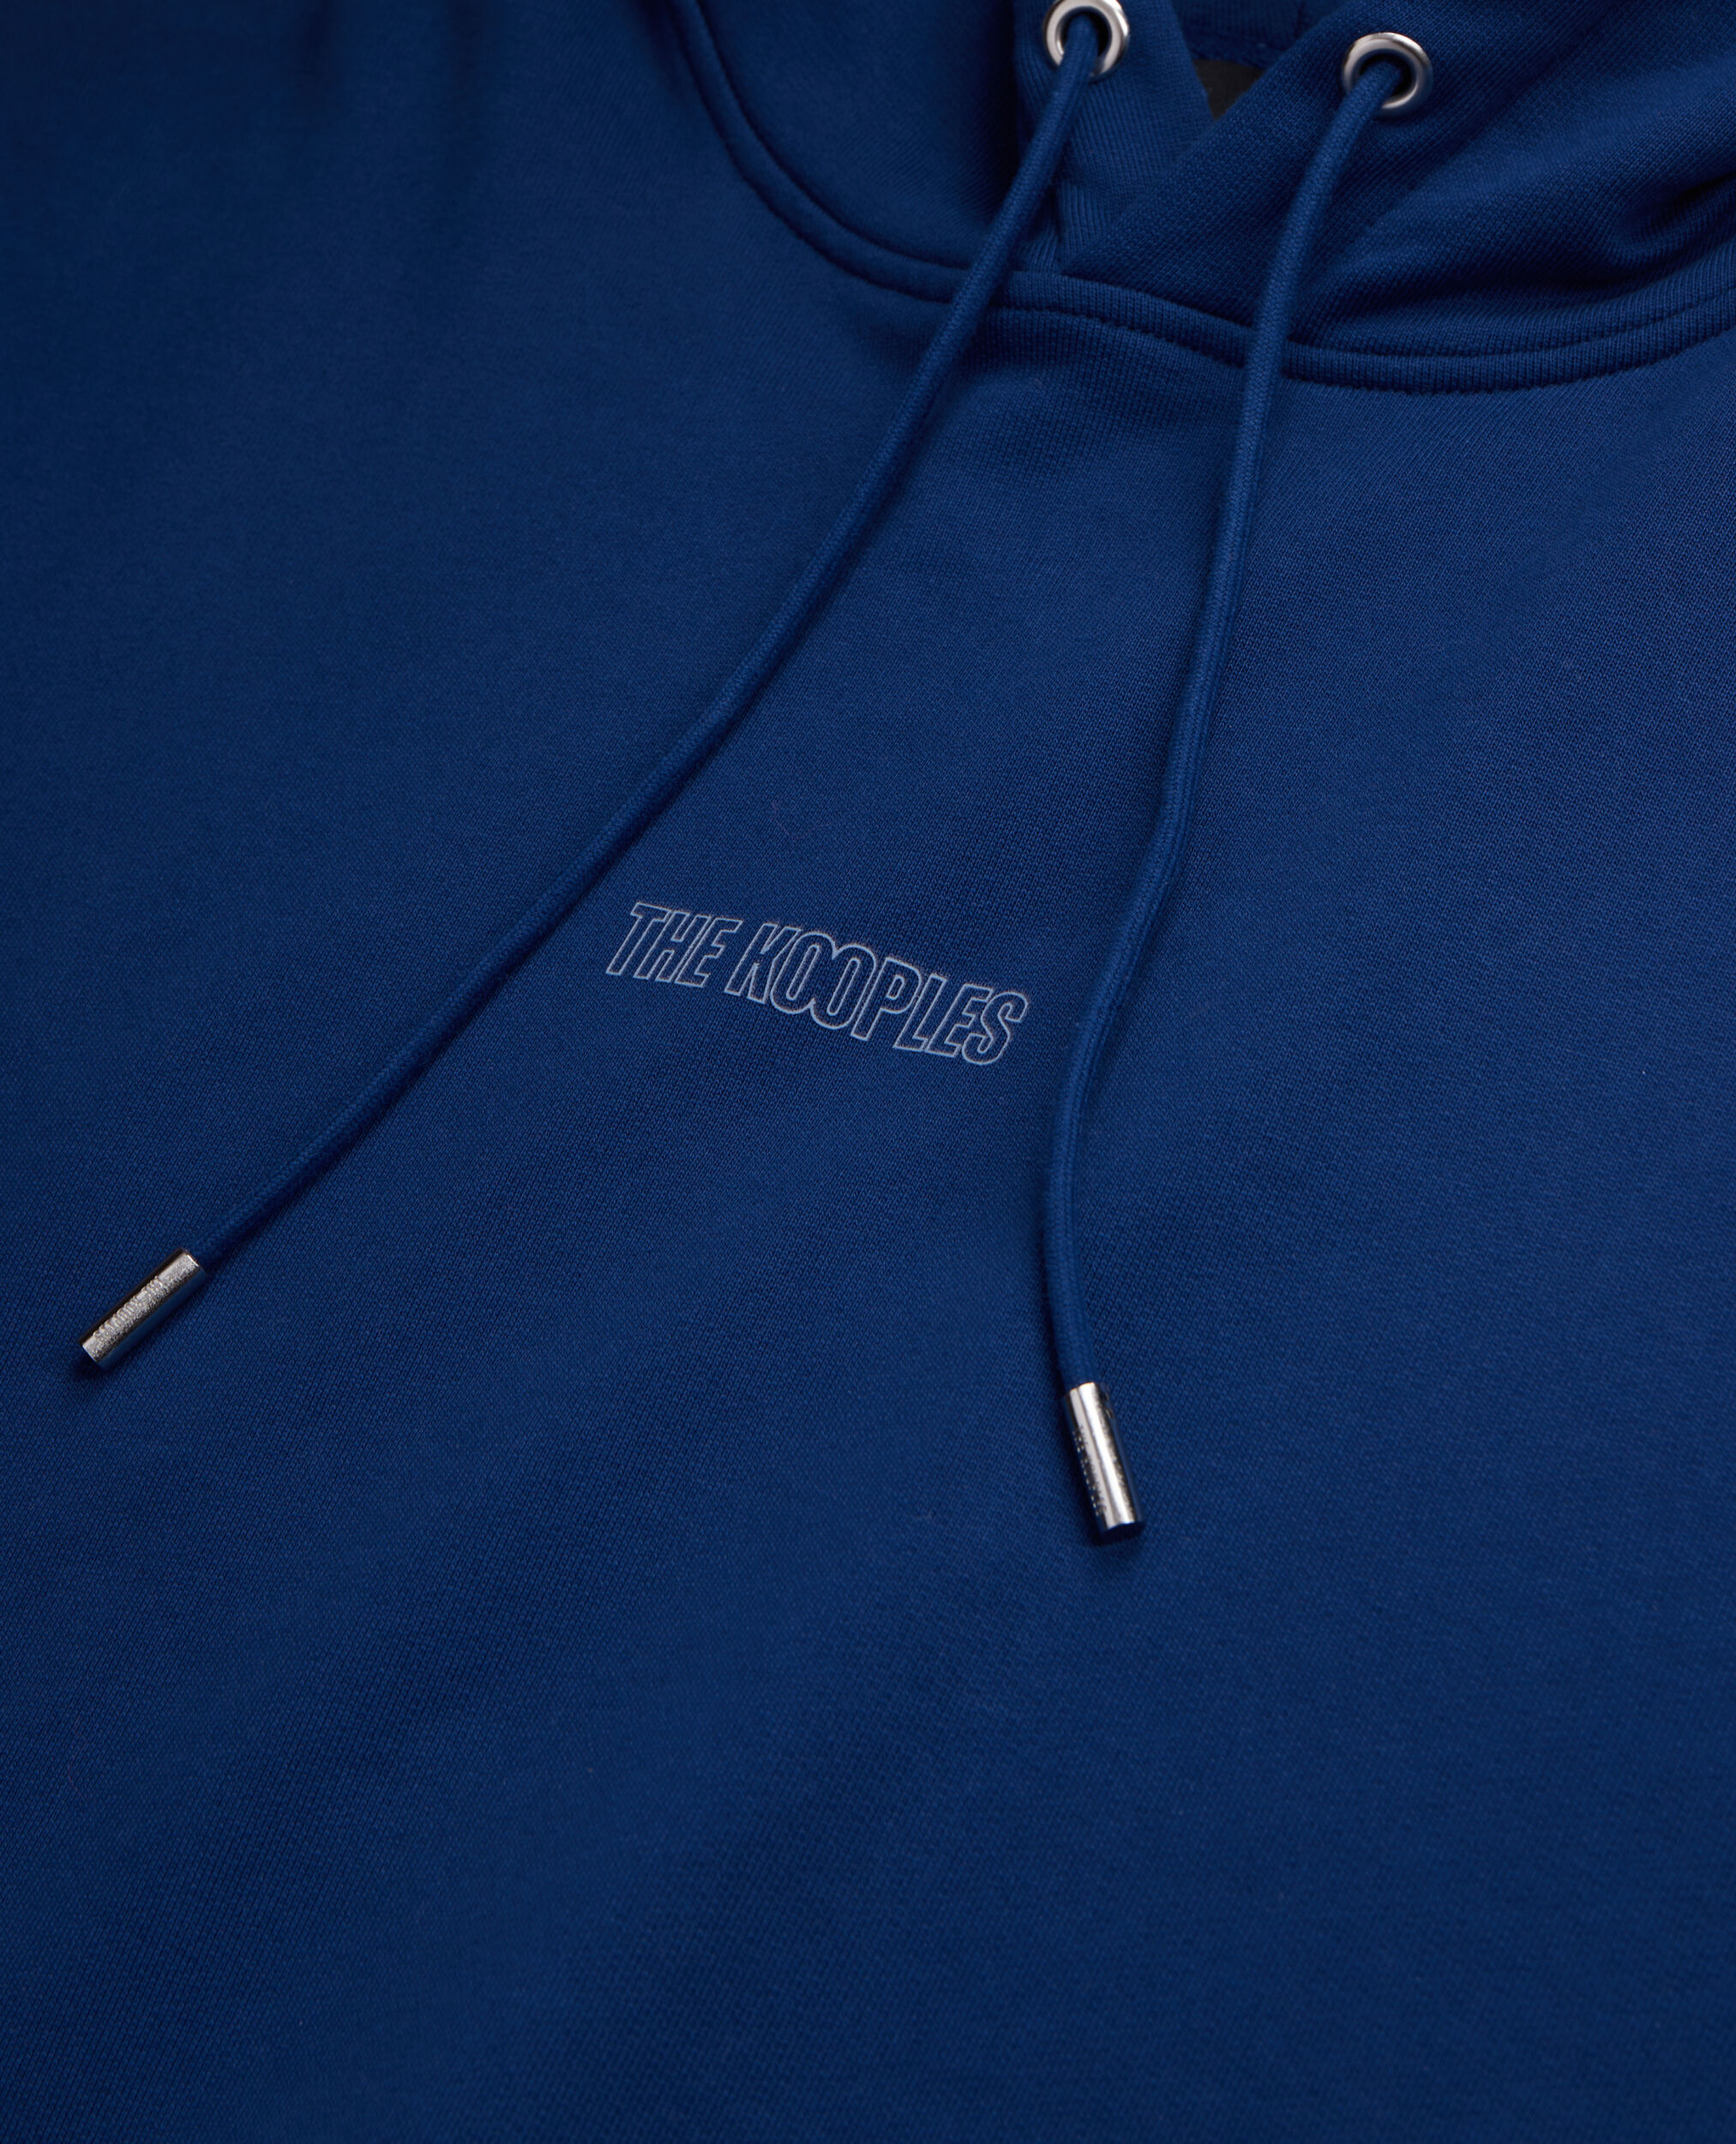 Sweatshirt à capuche bleu vif avec logo, ROYAL BLUE - DARK NAVY, hi-res image number null